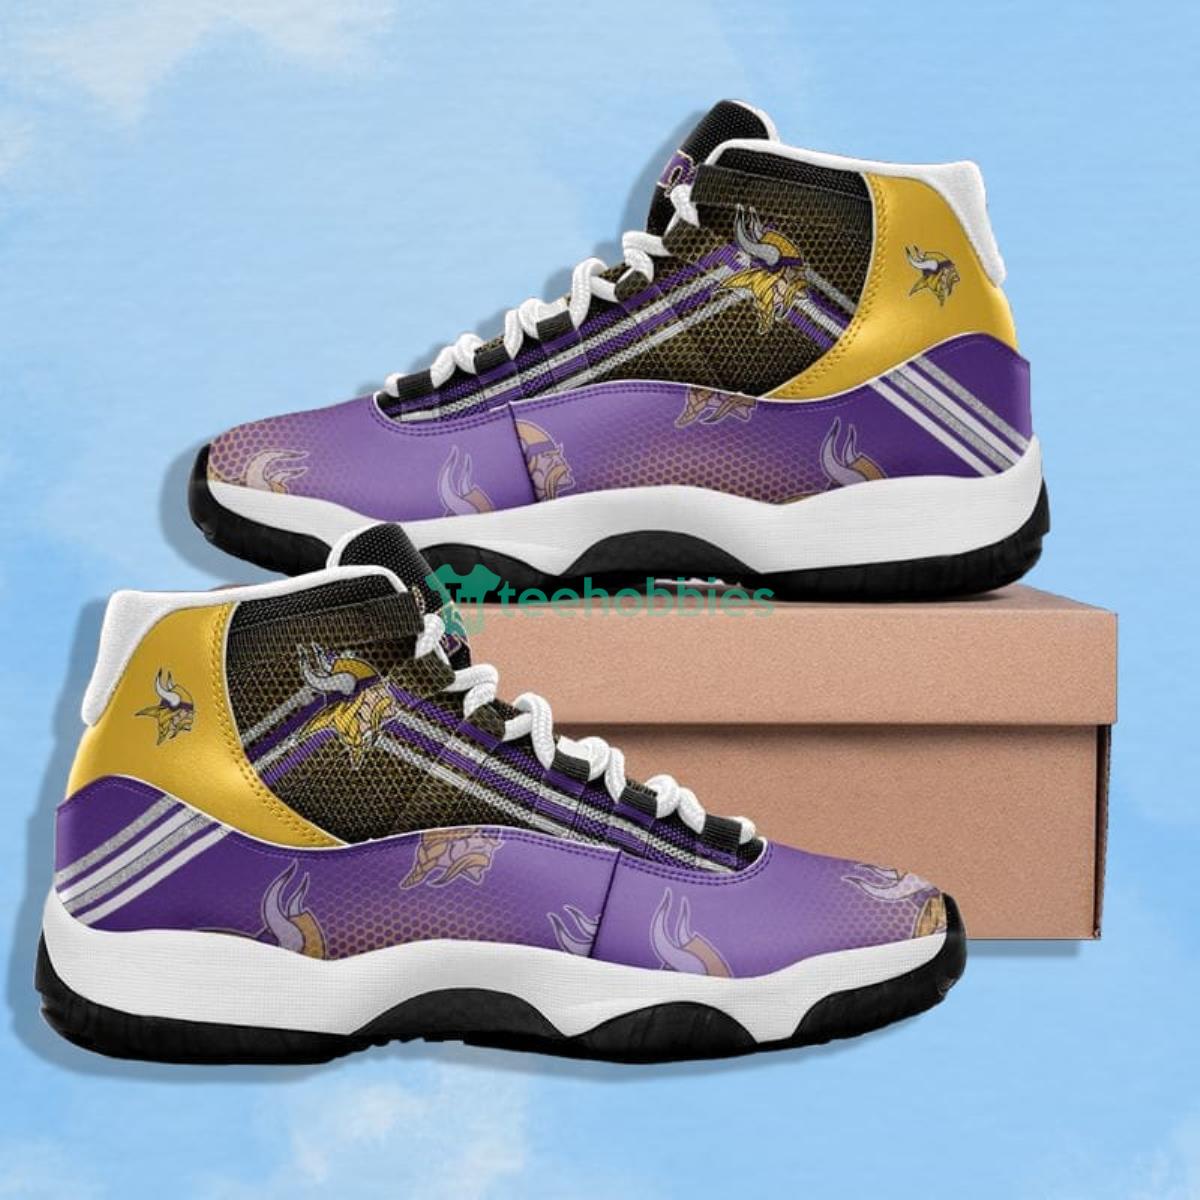 Minnesota Vikings American Football Impressive Design Air Jordan 11 Shoes Product Photo 1